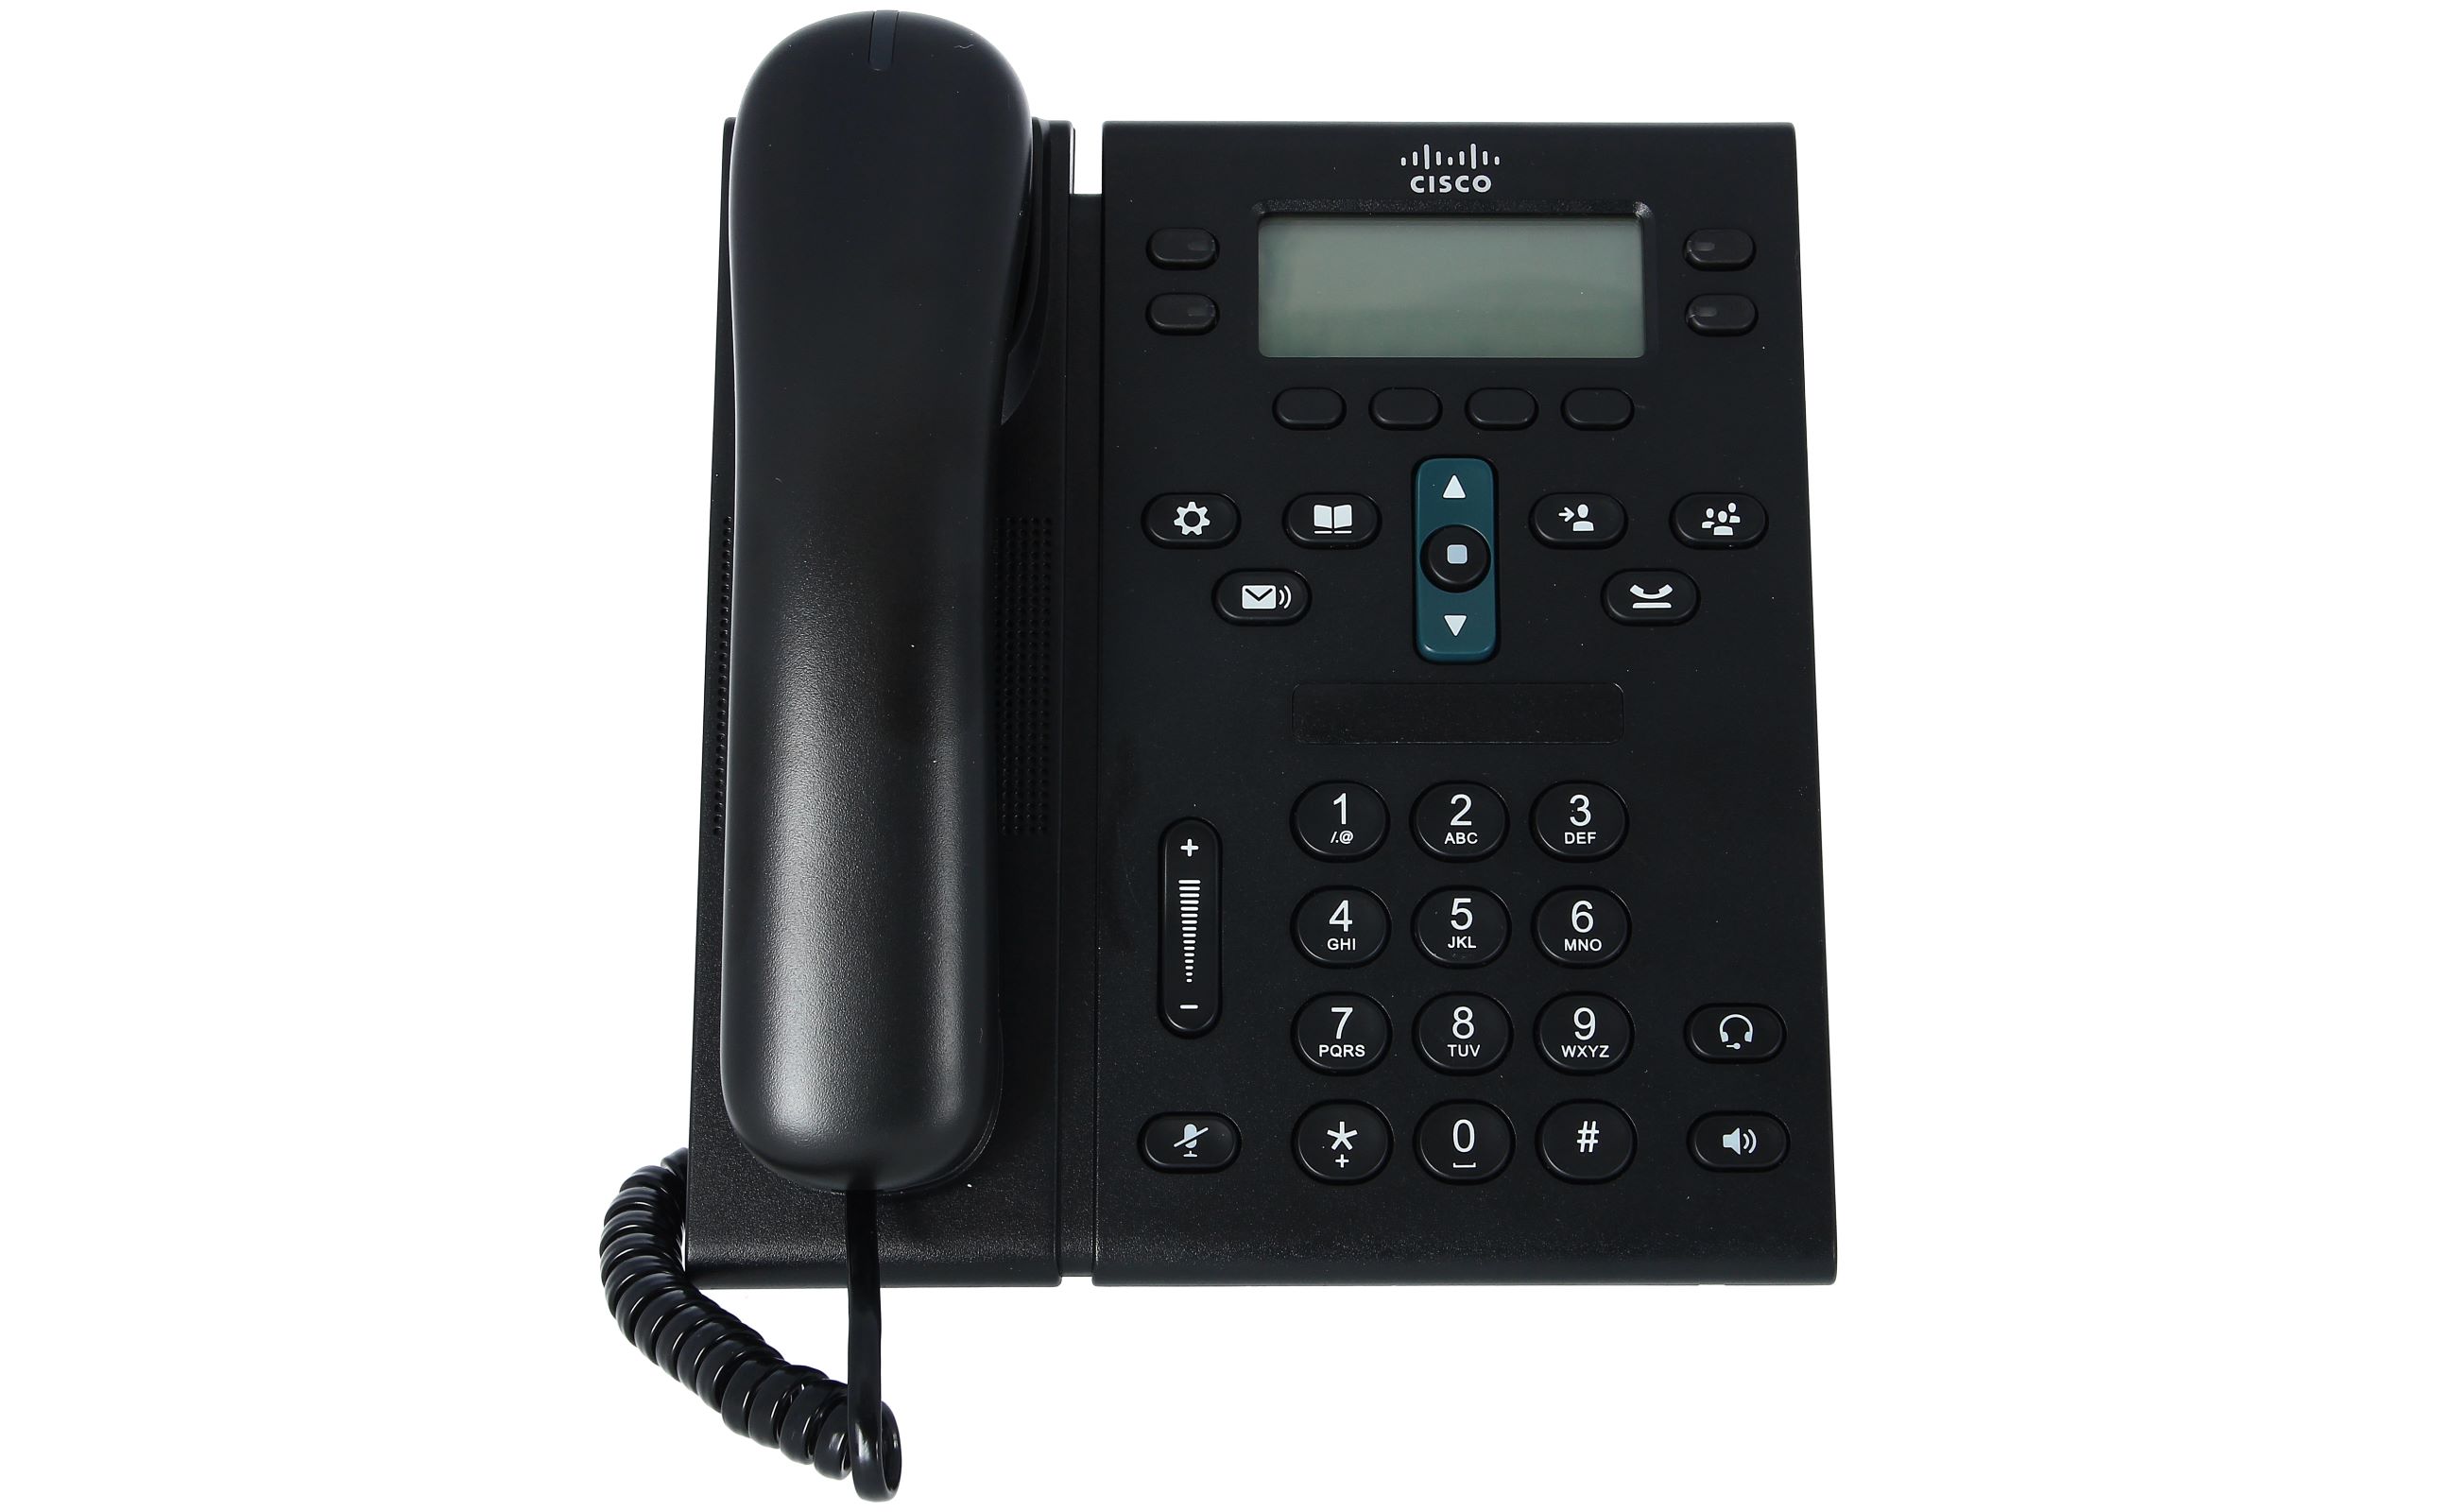 CP-6941 シスコ Cisco Unified IP Phone 6900 シリーズ 機【ビジネスホン 業務用 機 本体】 